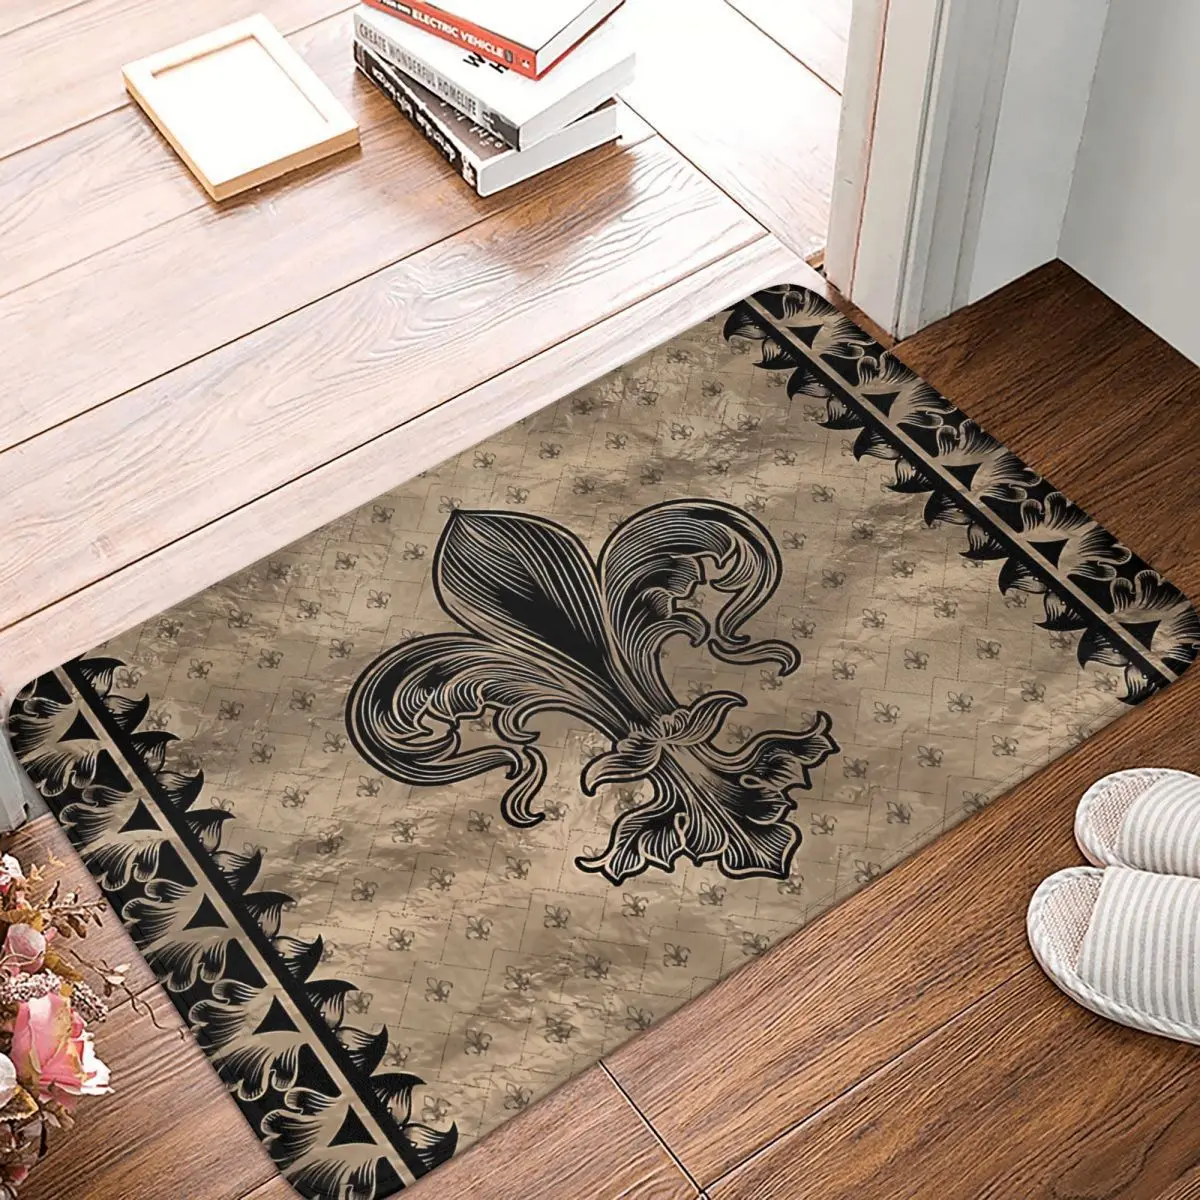 Gothic Bath Non-Slip Carpet Fleur De Lis Black And Gold Living Room Mat Welcome Doormat Home Decoration Rug